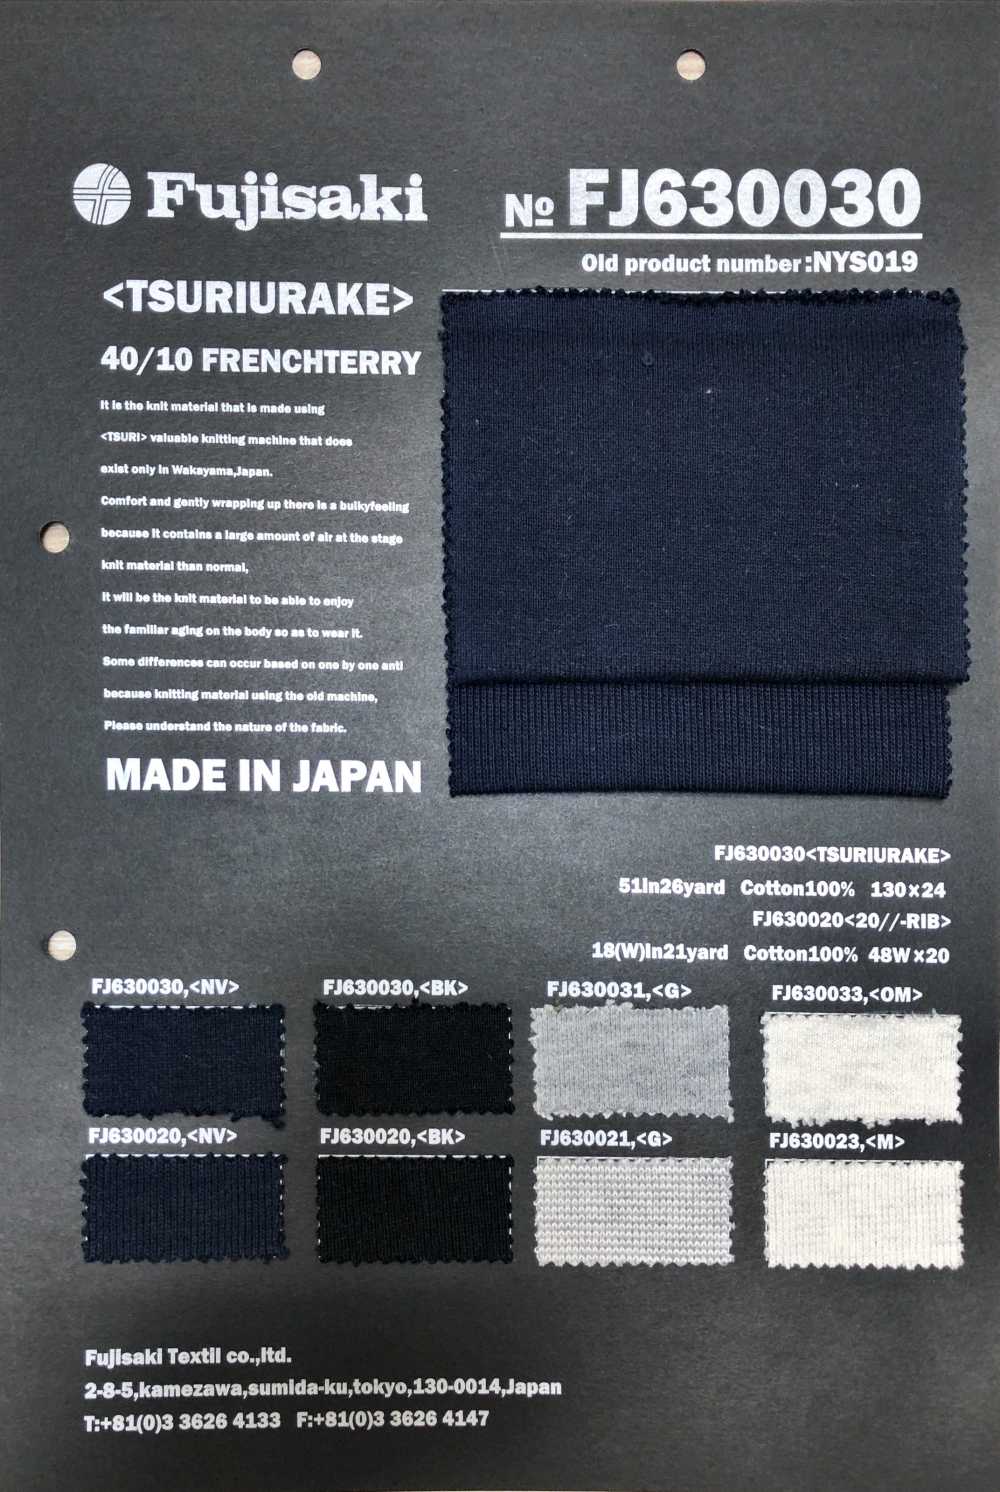 FJ630020 20//- Punto Acanalado[Fabrica Textil] Fujisaki Textile